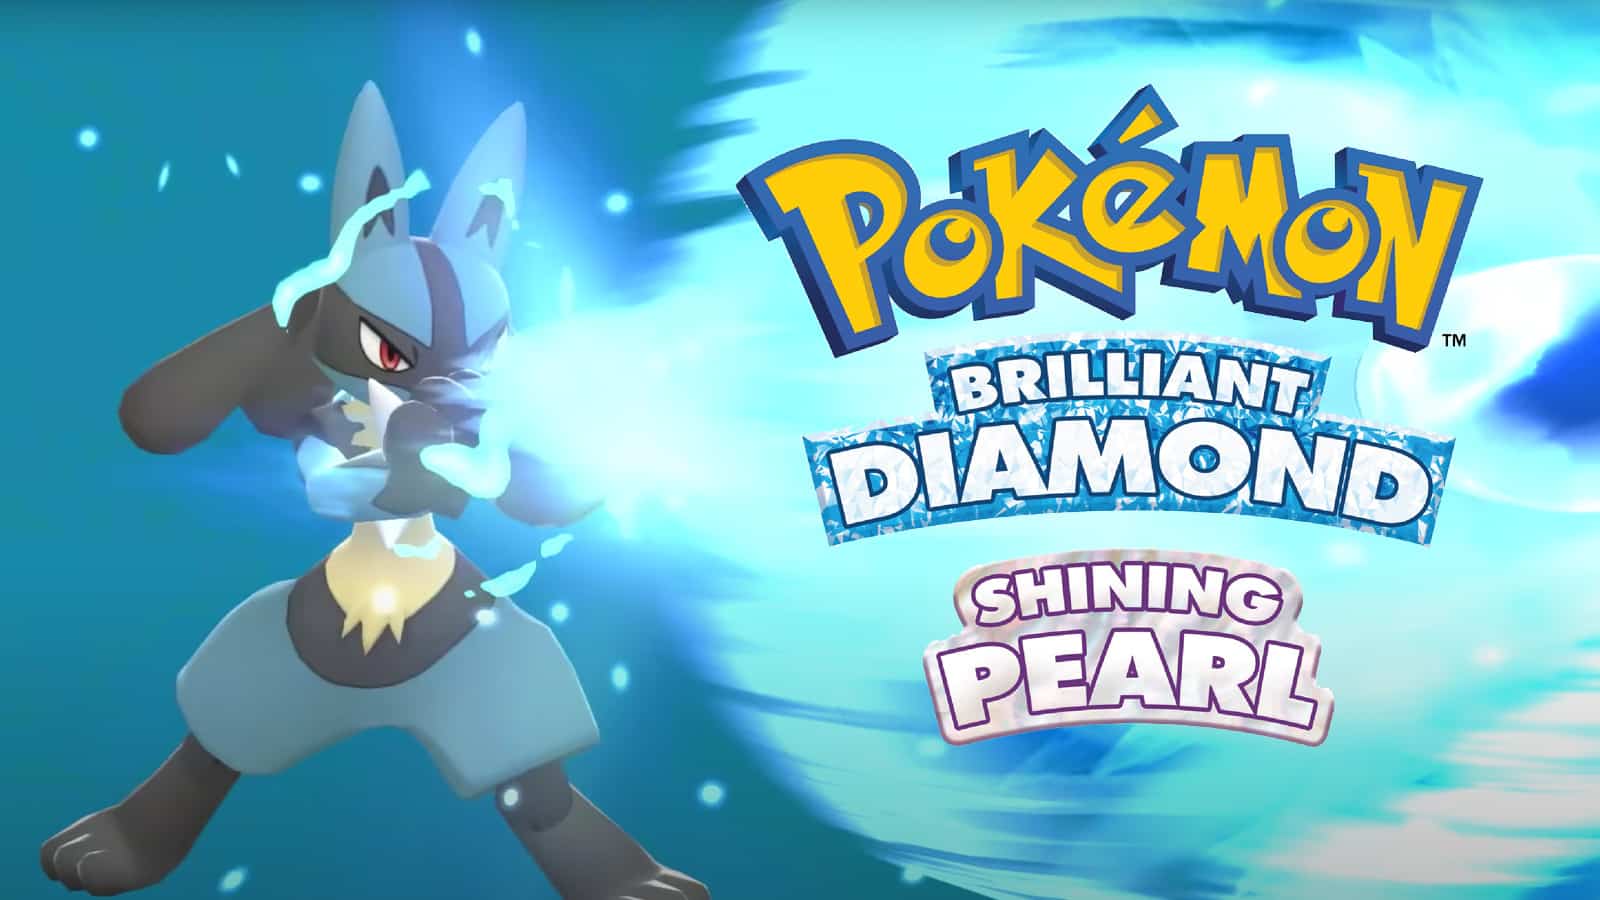 Return to the Sinnoh region in Pokémon Brilliant Diamond and